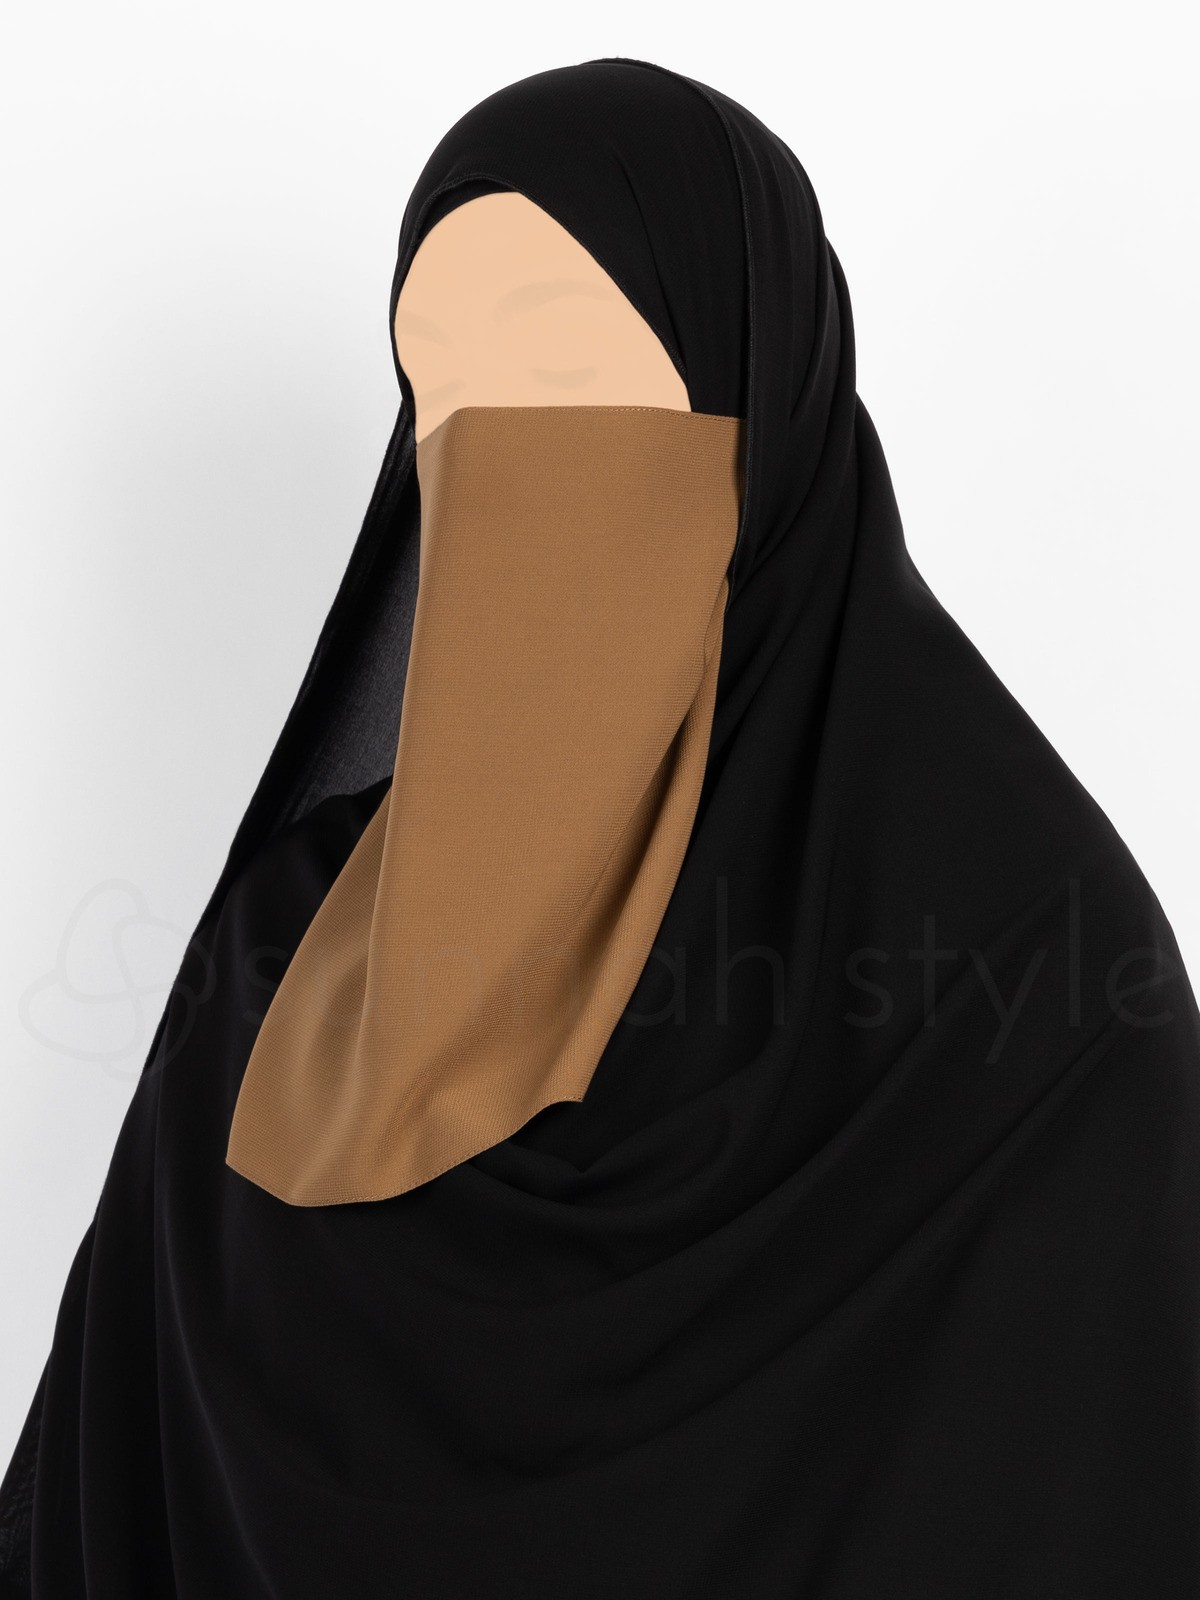 Sunnah Style - Elastic Half Niqab (Caramel)